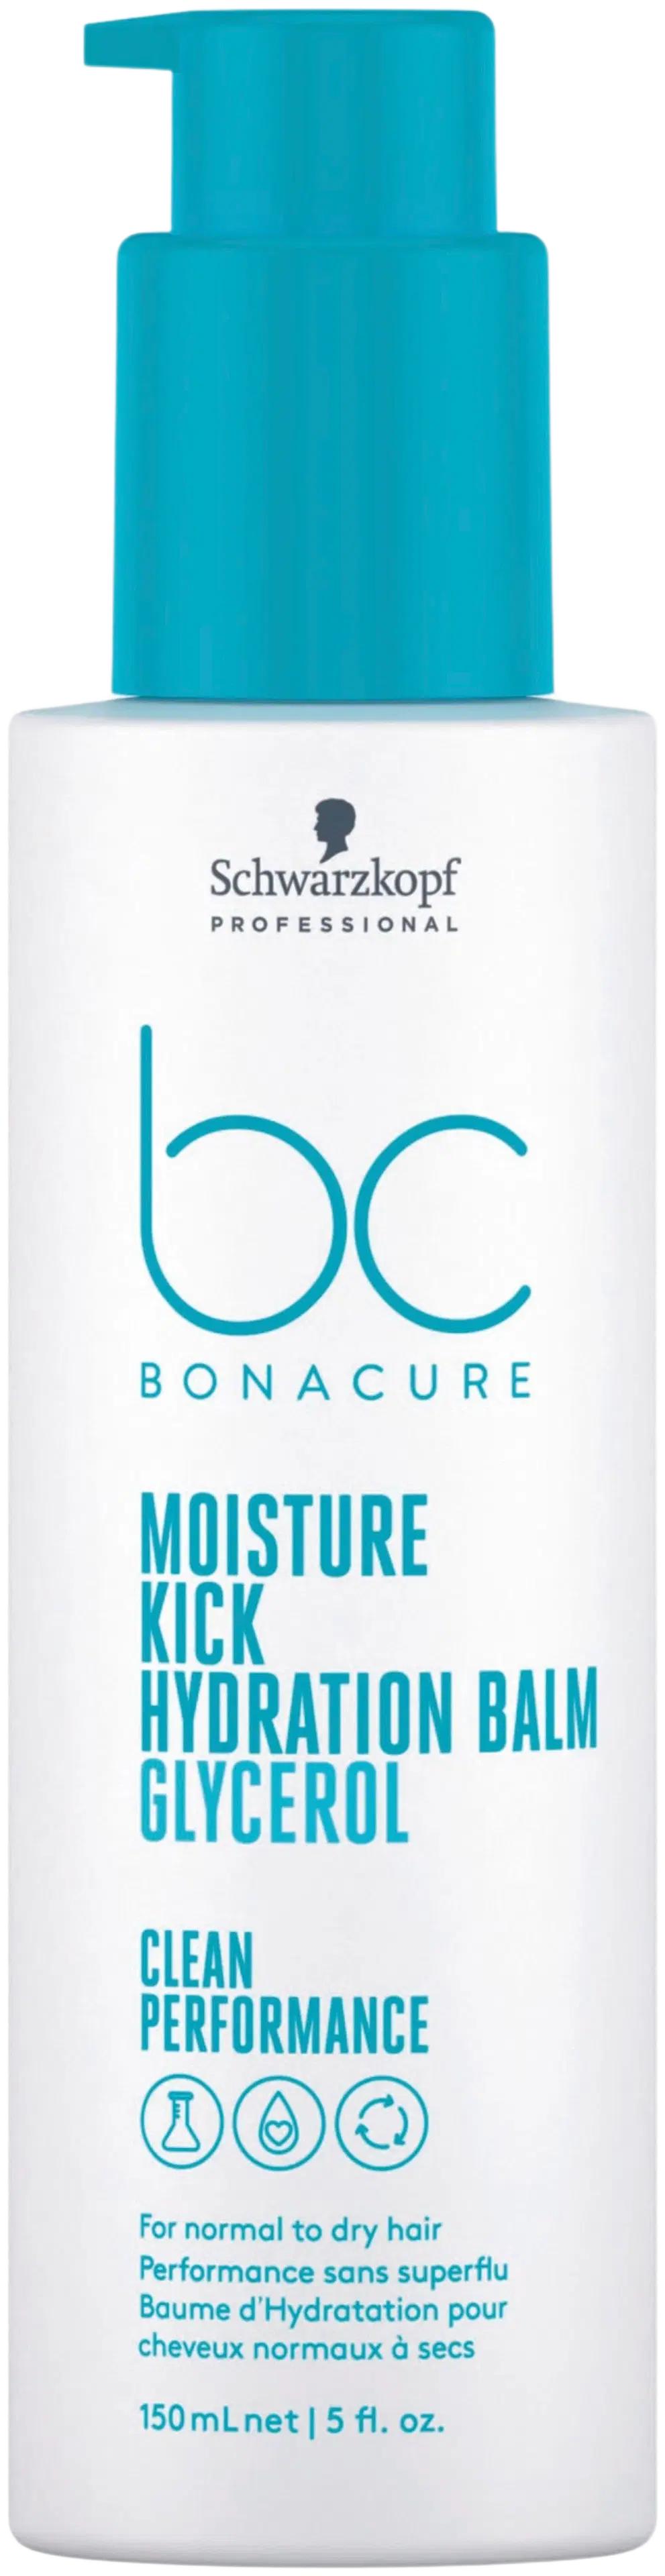 BC BONACURE Moisture Kick Hydration Balm